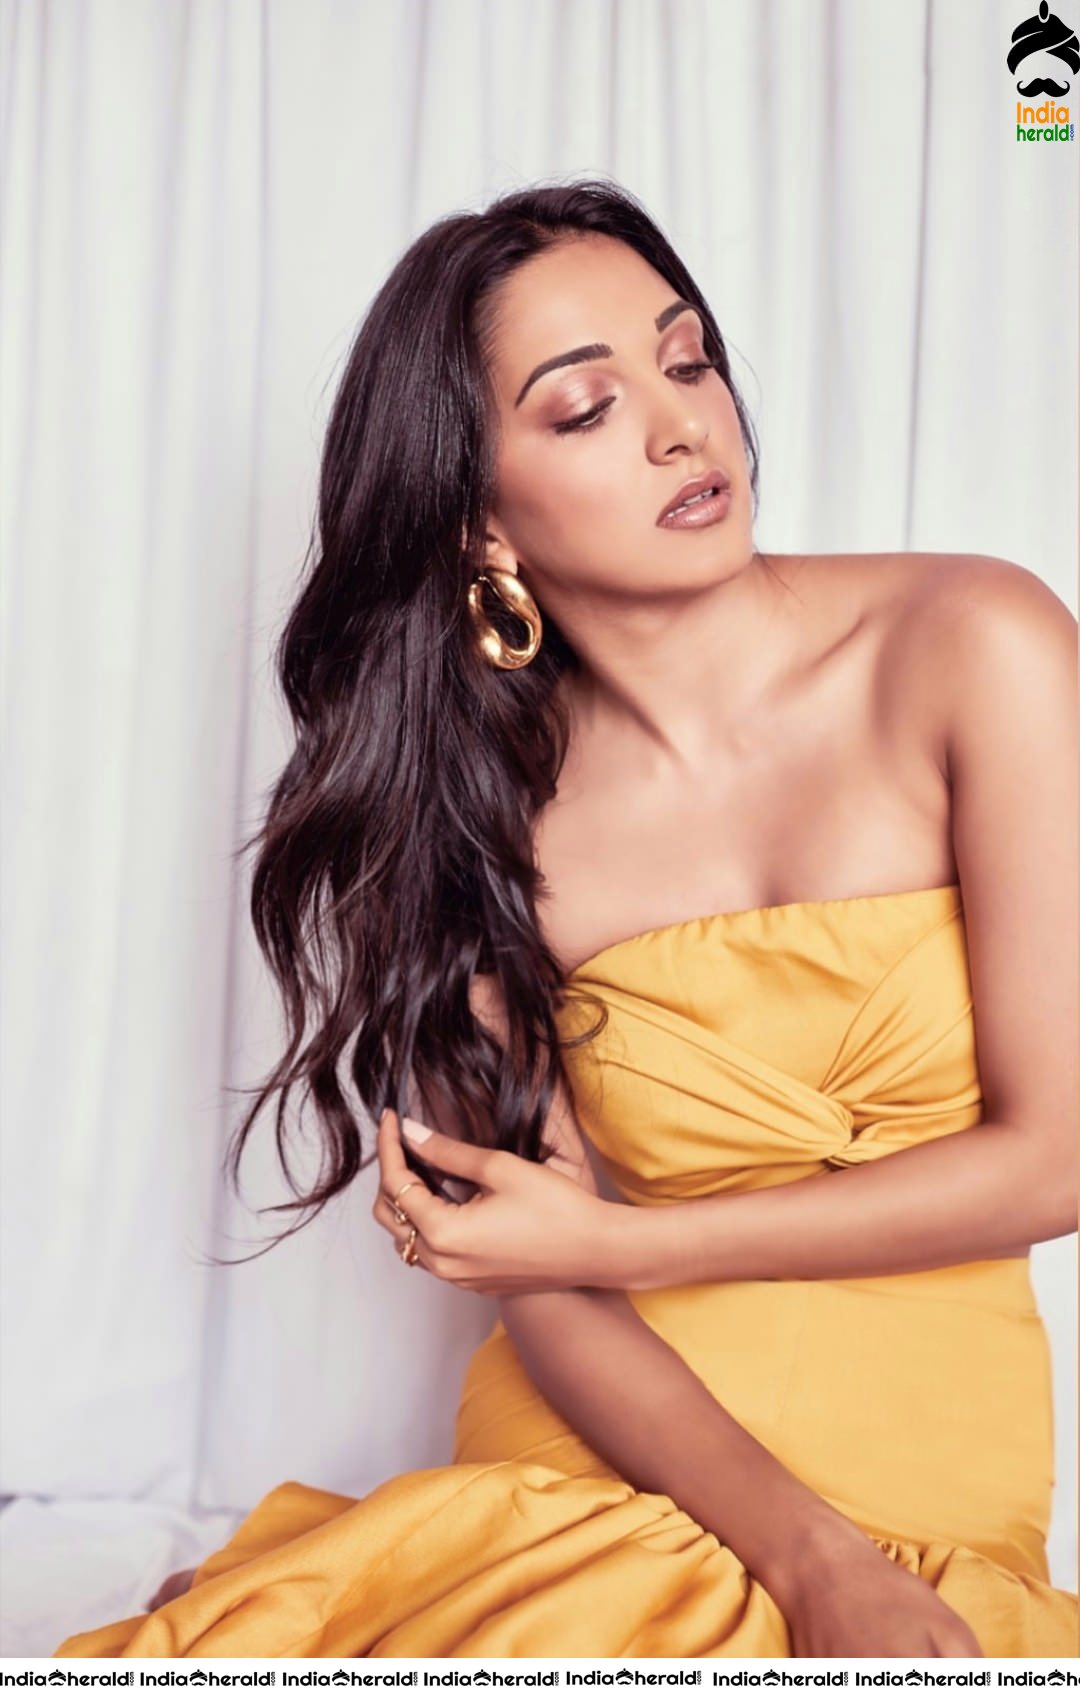 Kiara Advani Hot Photoshoot in Yellow to tease your temptations